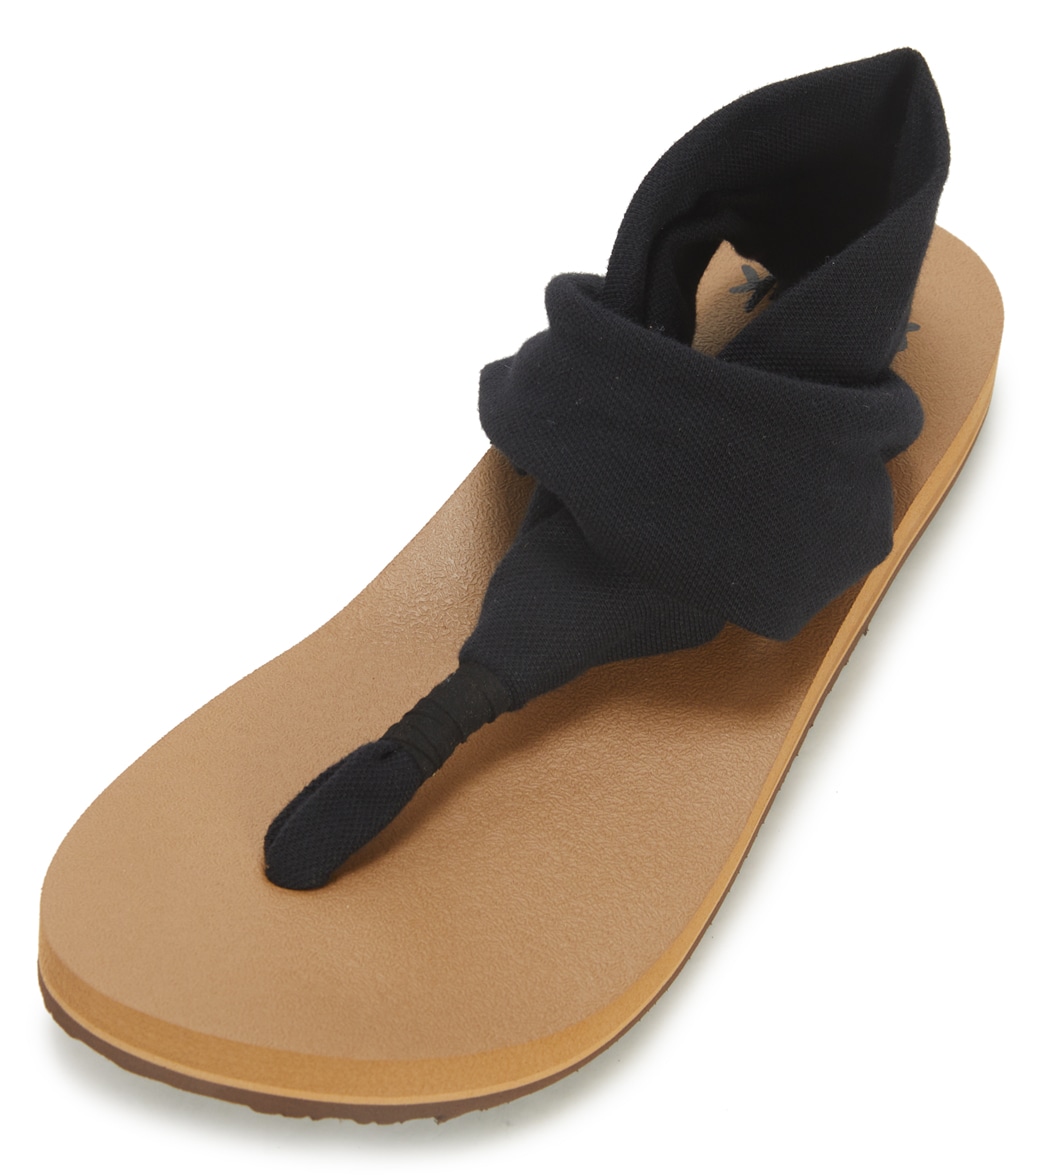 Sanuk Women's Sling St Sandals - Black/Tan 05 100% Rubber - Swimoutlet.com